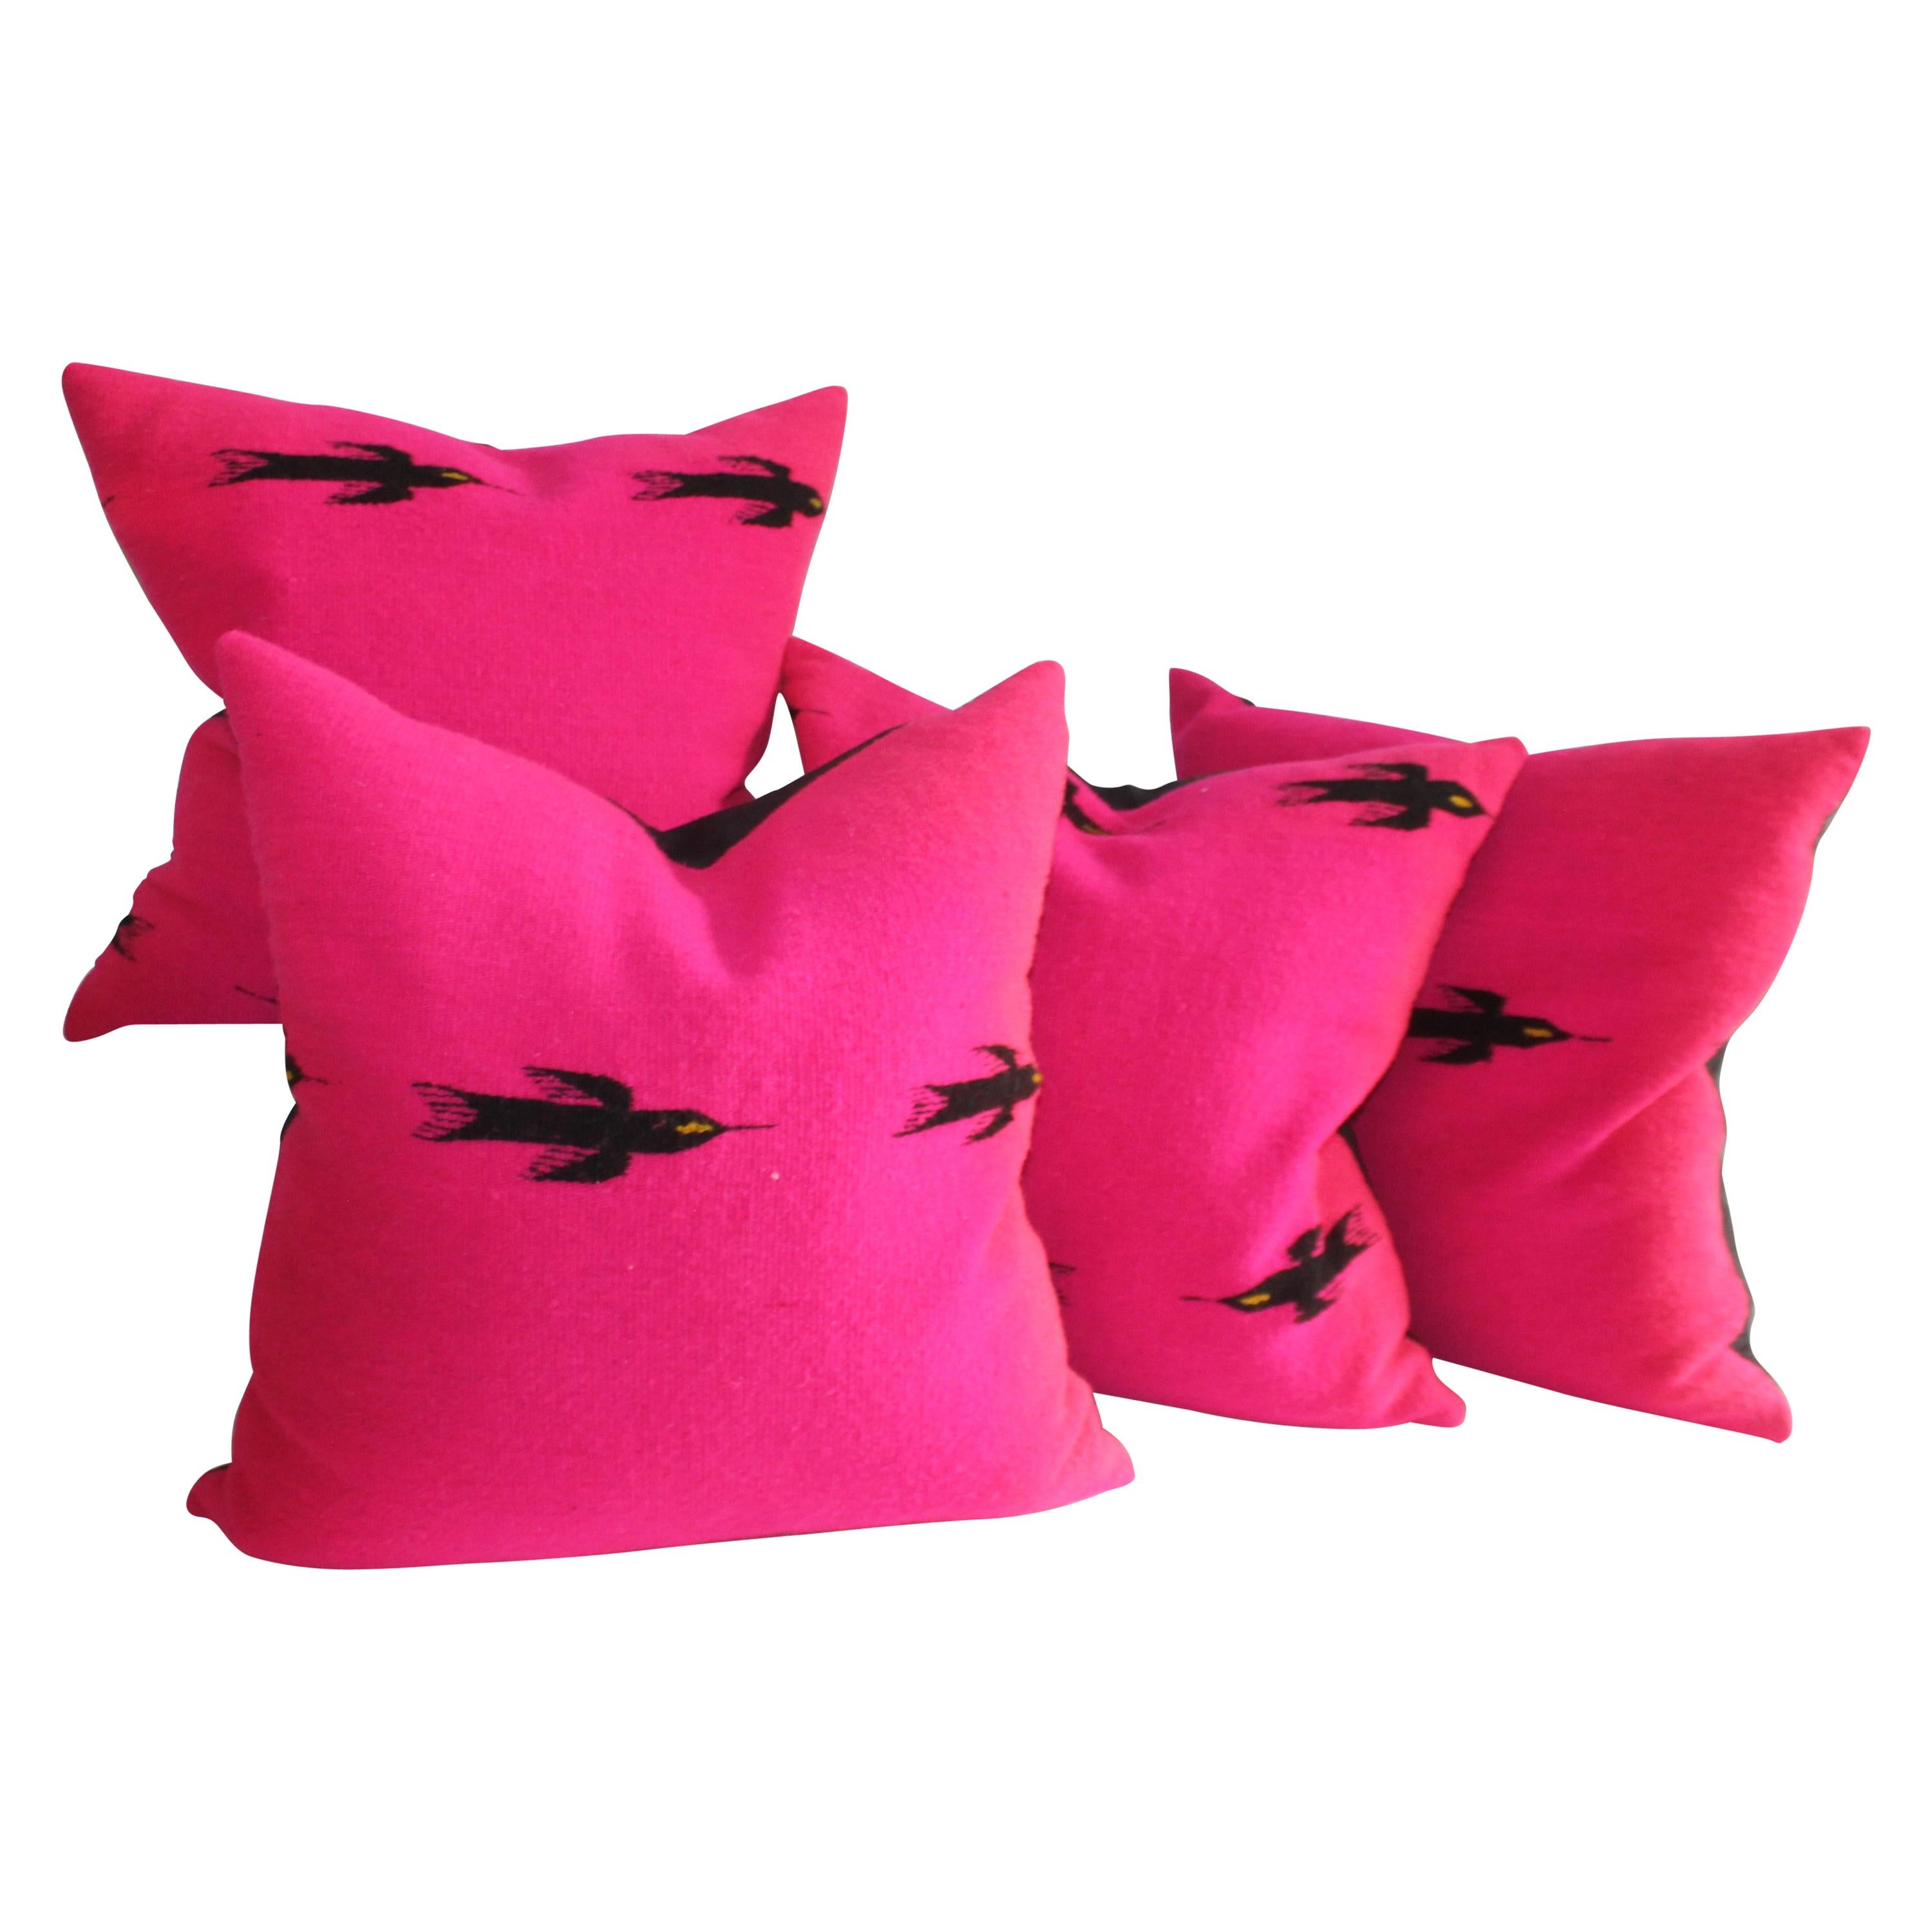 Mexican Indian Weaving Pillows Birds in Flight Collection of Four Pillows